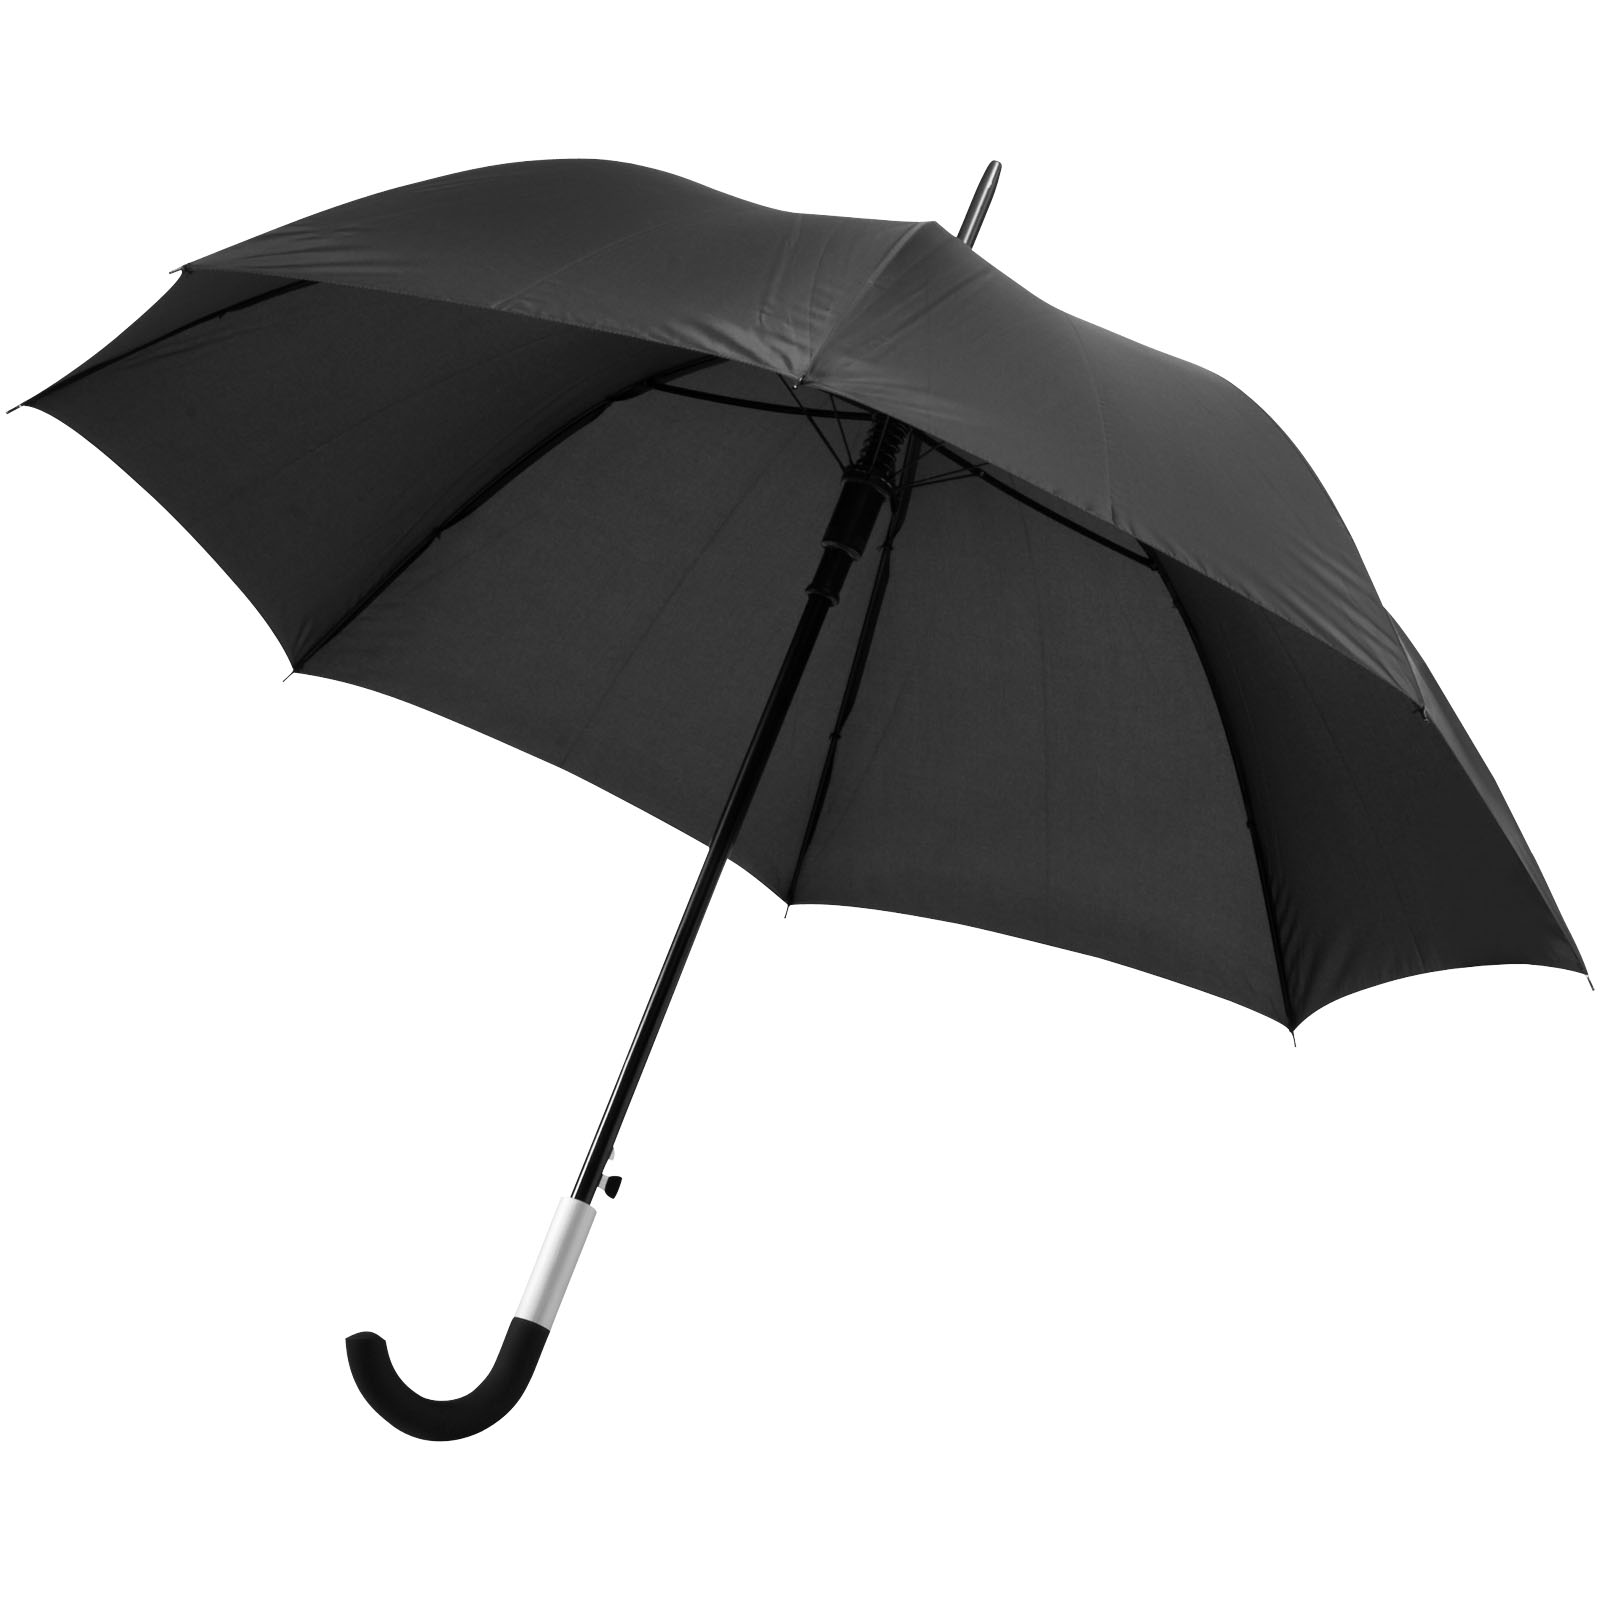 Advertising Standard Umbrellas - Arch 23